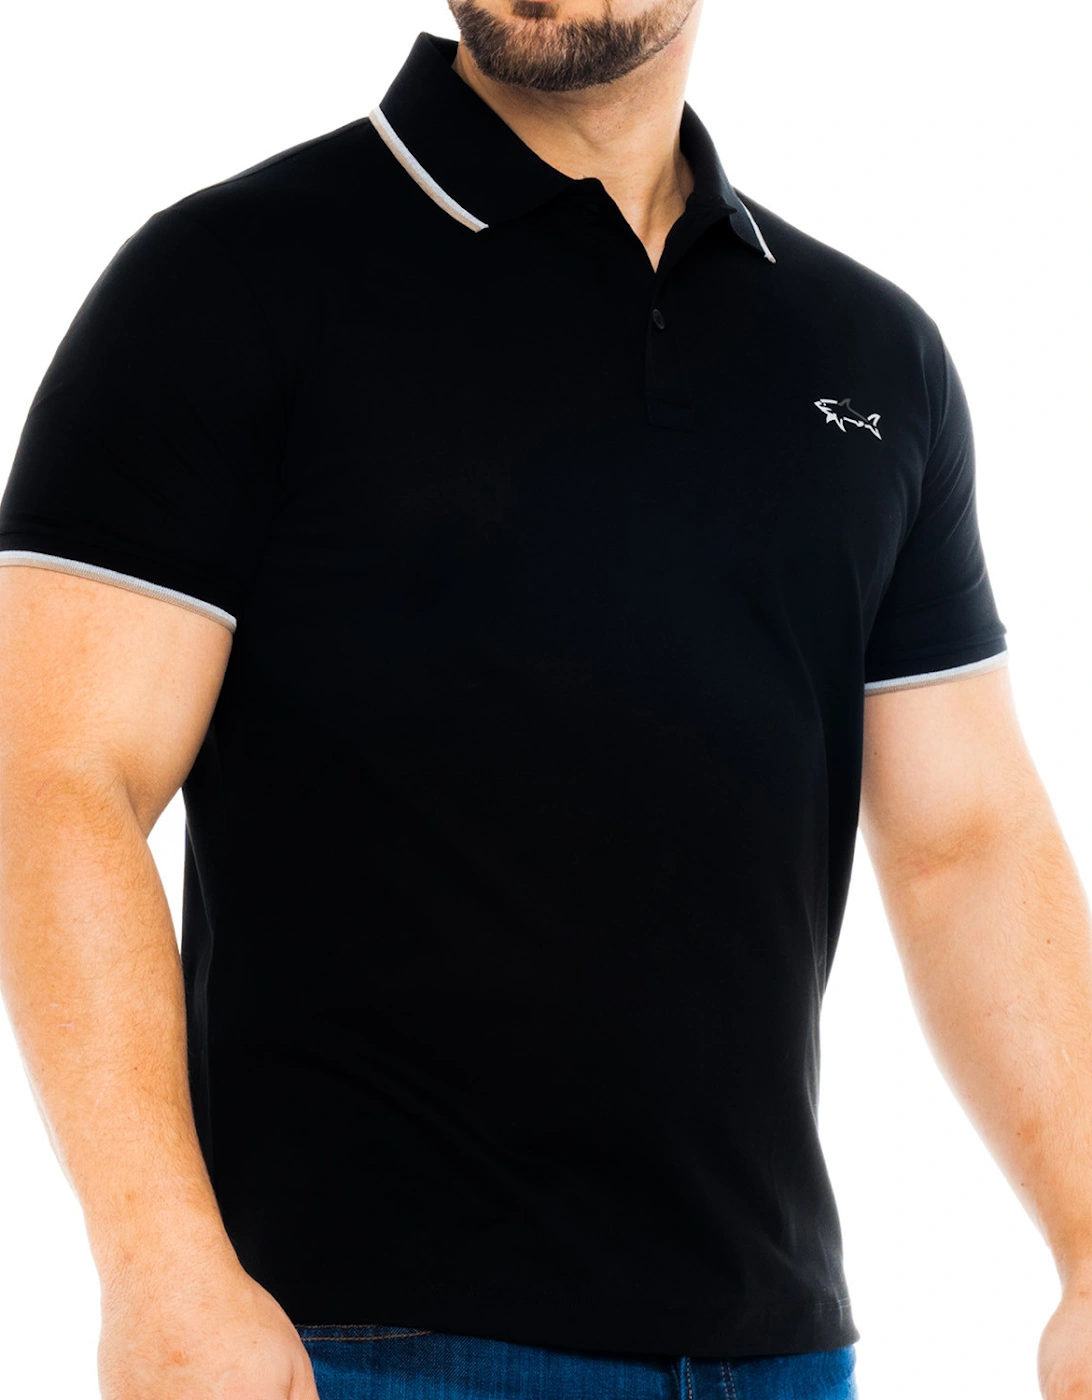 Mens Tipped Collar Reflex Polo Shirt (Black)